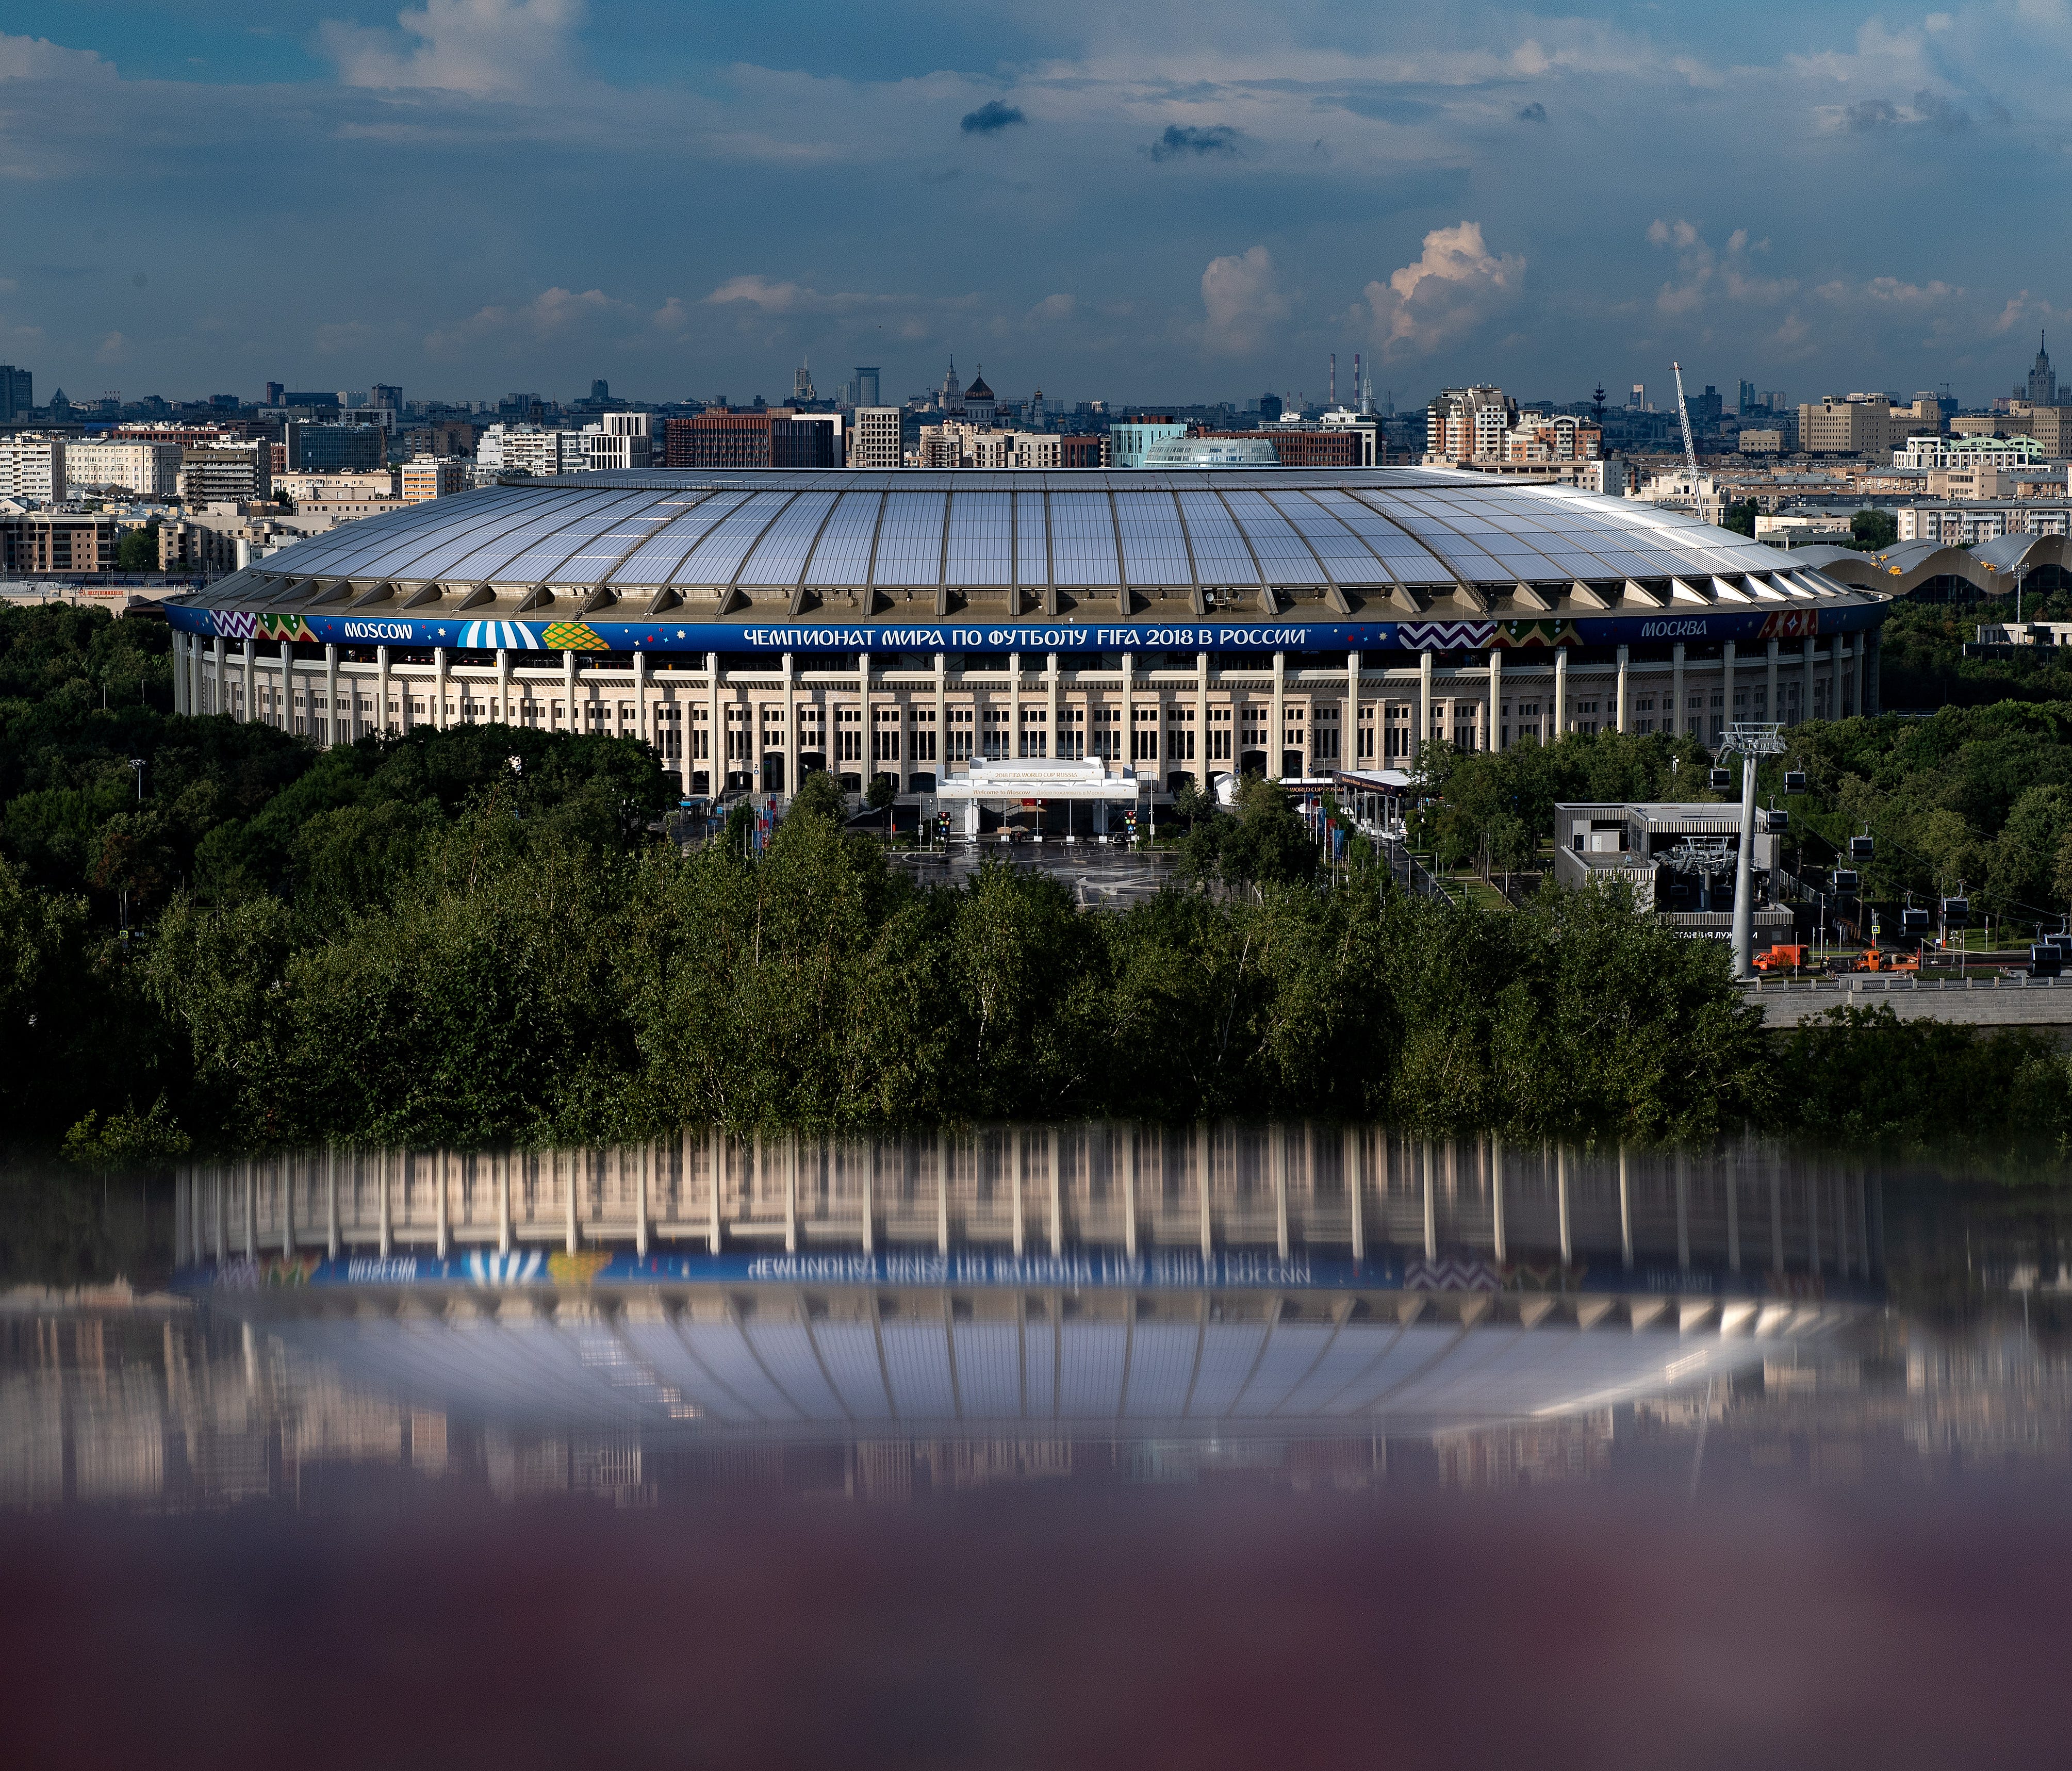 A view of the Luzhniki Stadium in Moscow.